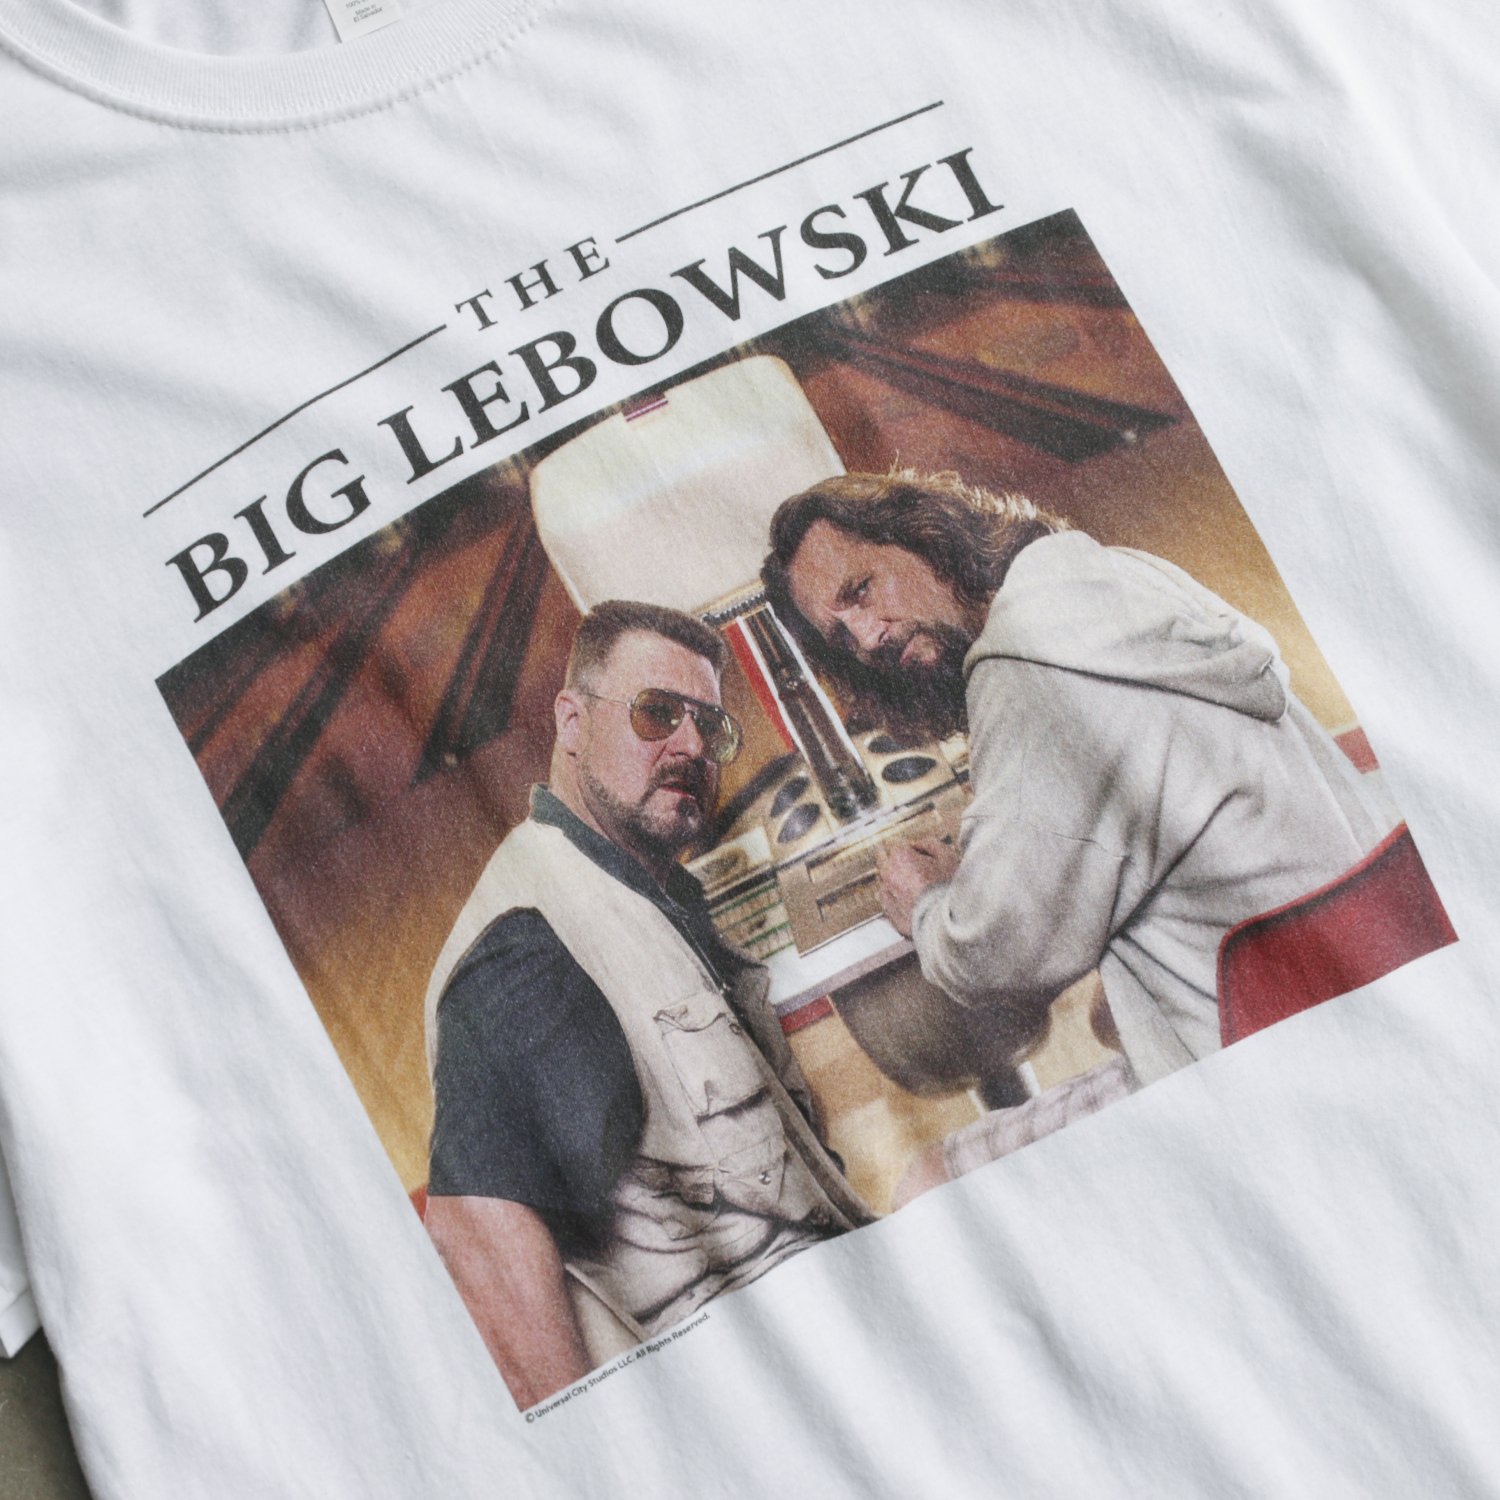 Big Lebowski Tシャツいい感じの雰囲気だと思います